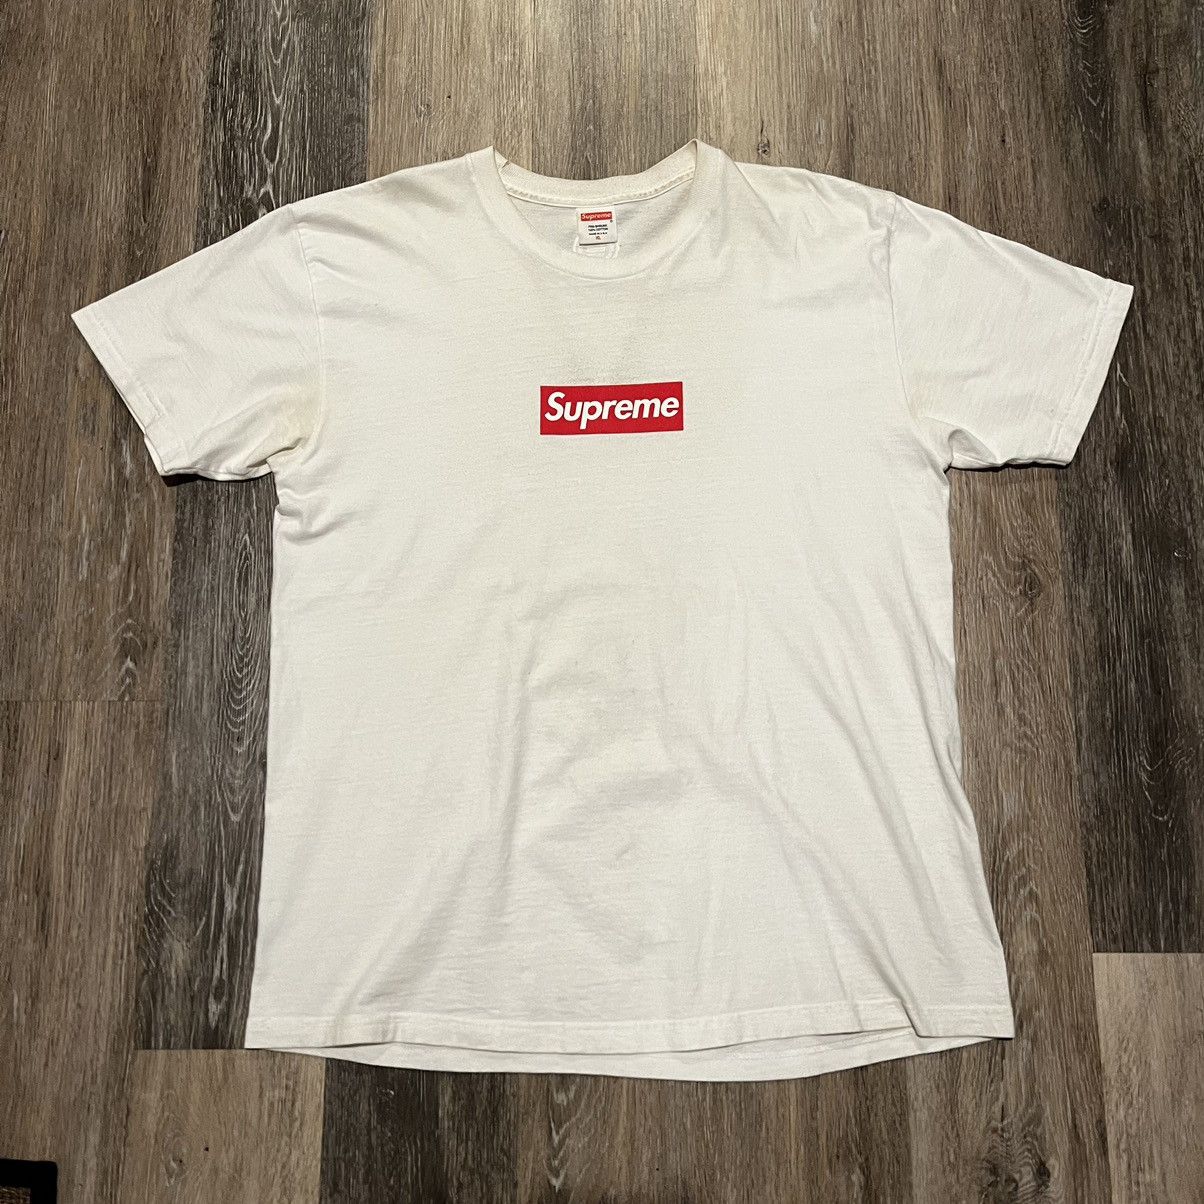 Supreme Supreme 20th anniversary box logo tee shirt | Grailed